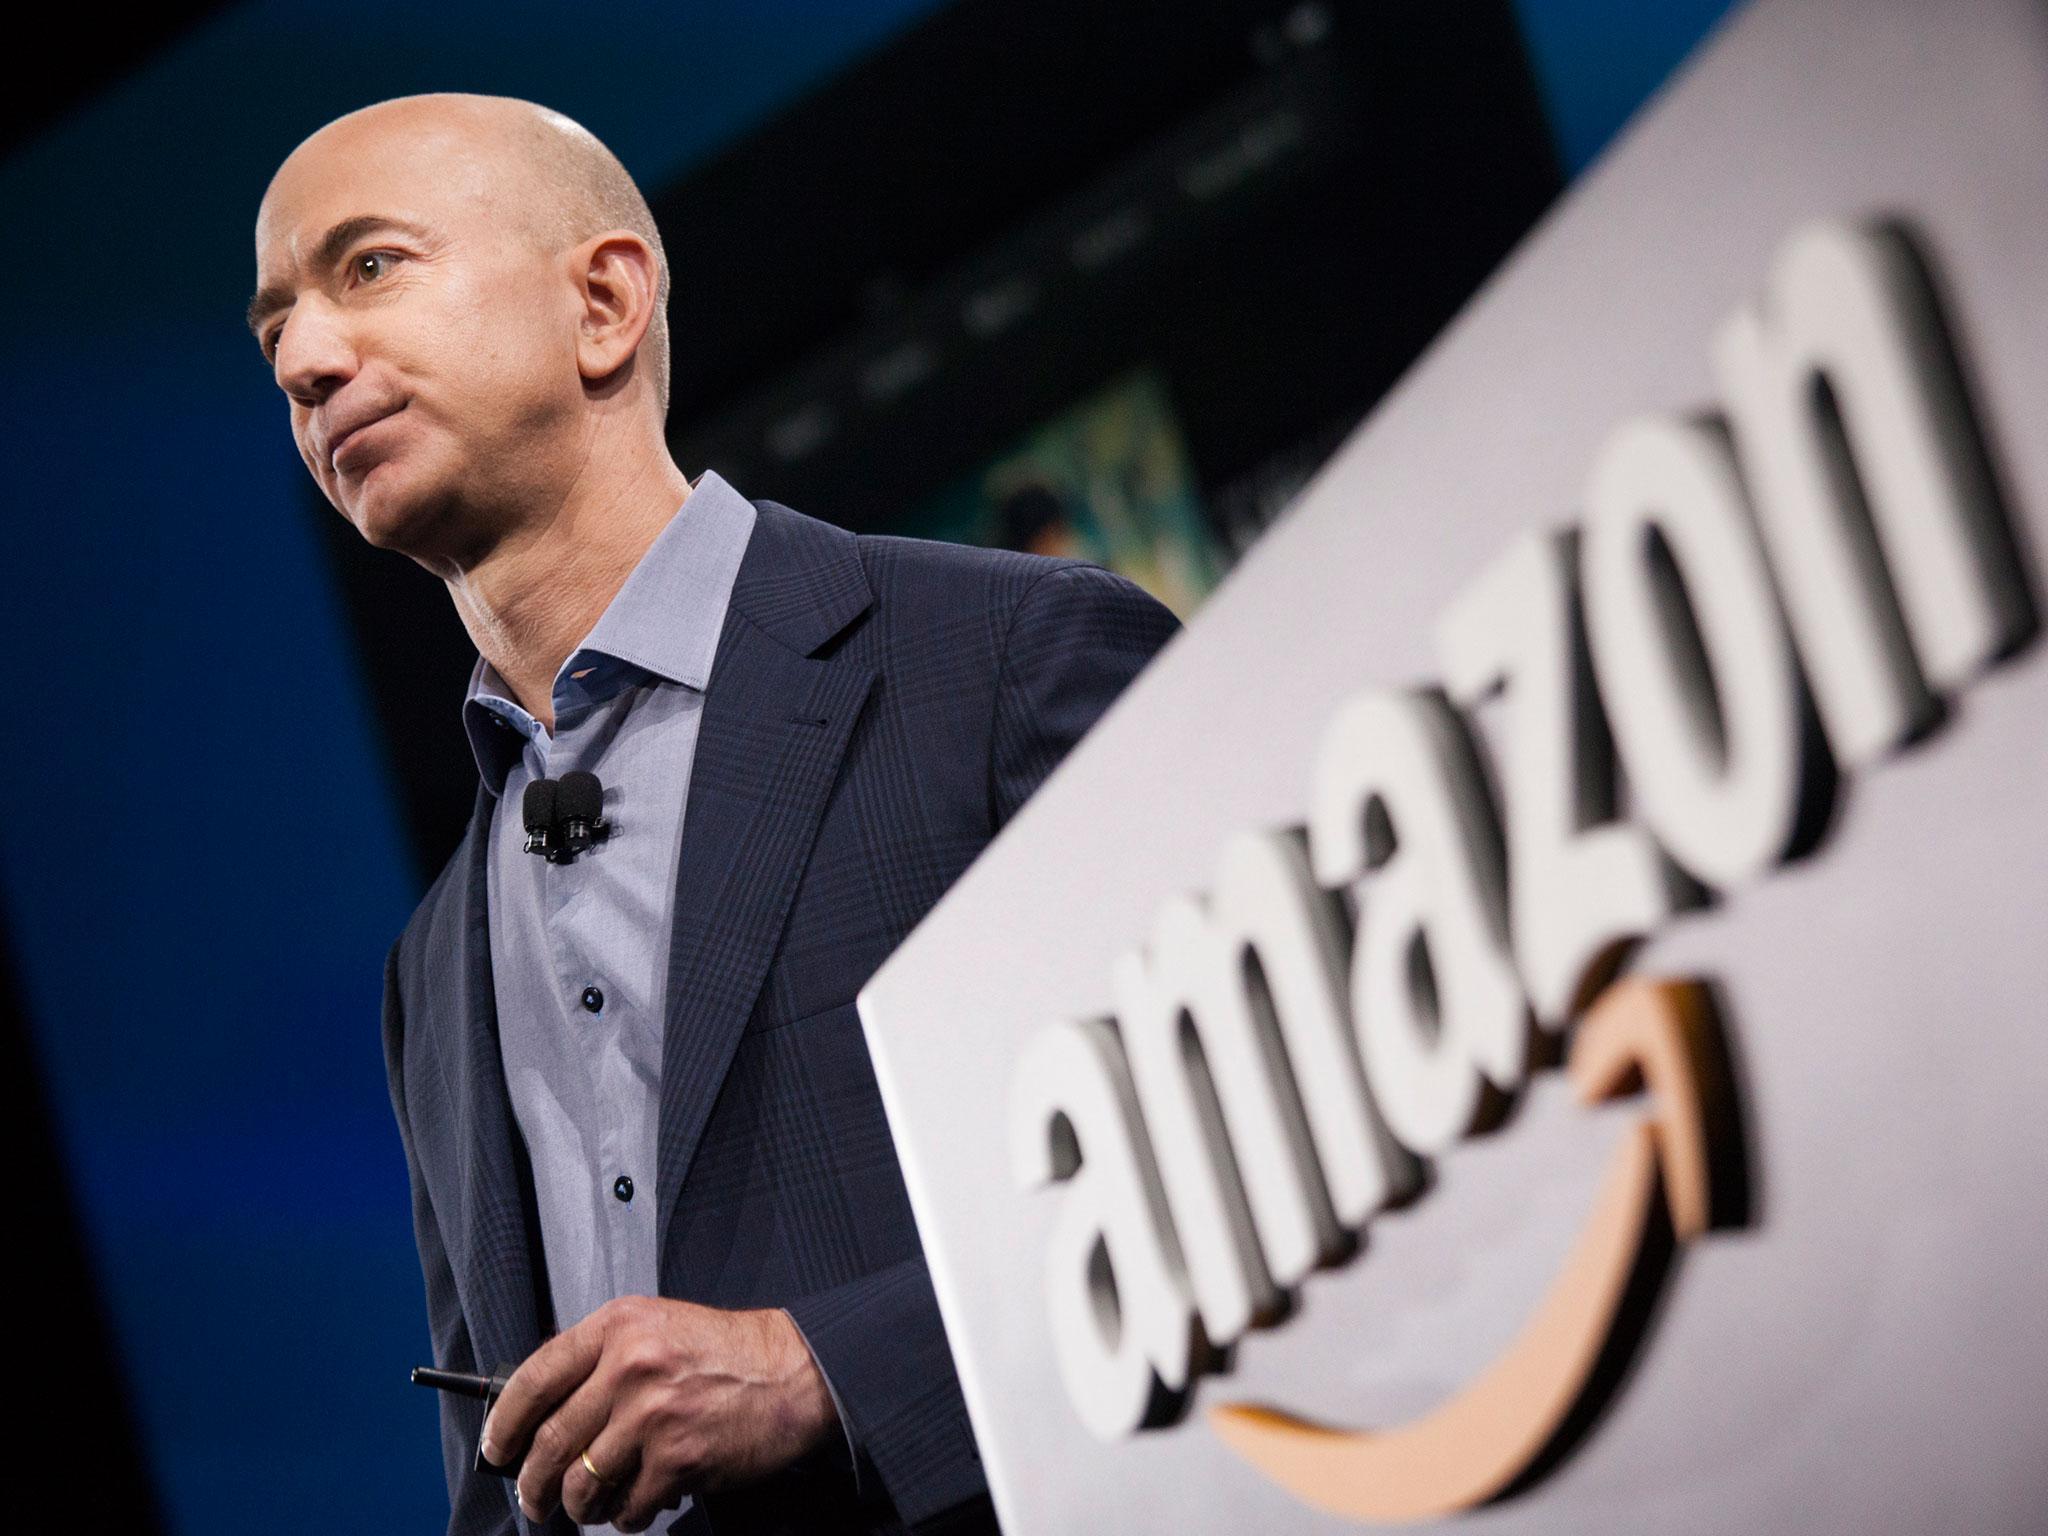 Jeff Bezos' Blue Origin startup will invest $200 million in the Florida project